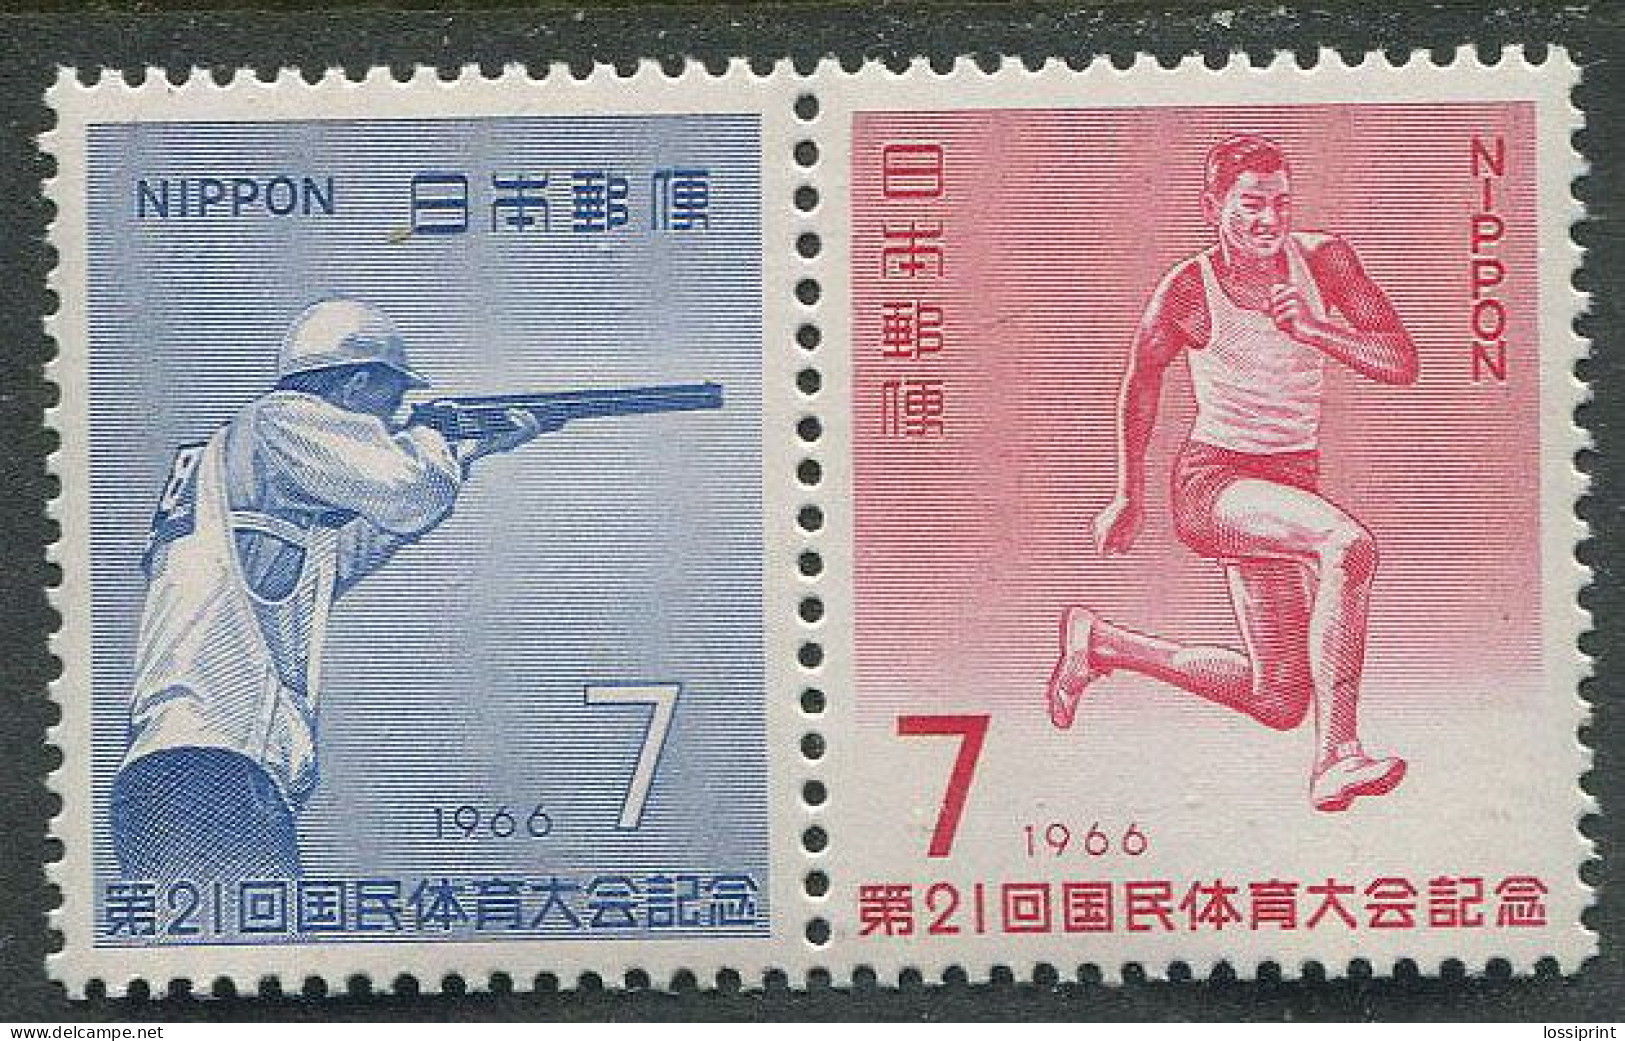 Japan:Unused Stamps Shooting And Running, 1966, MNH - Tiro (armi)